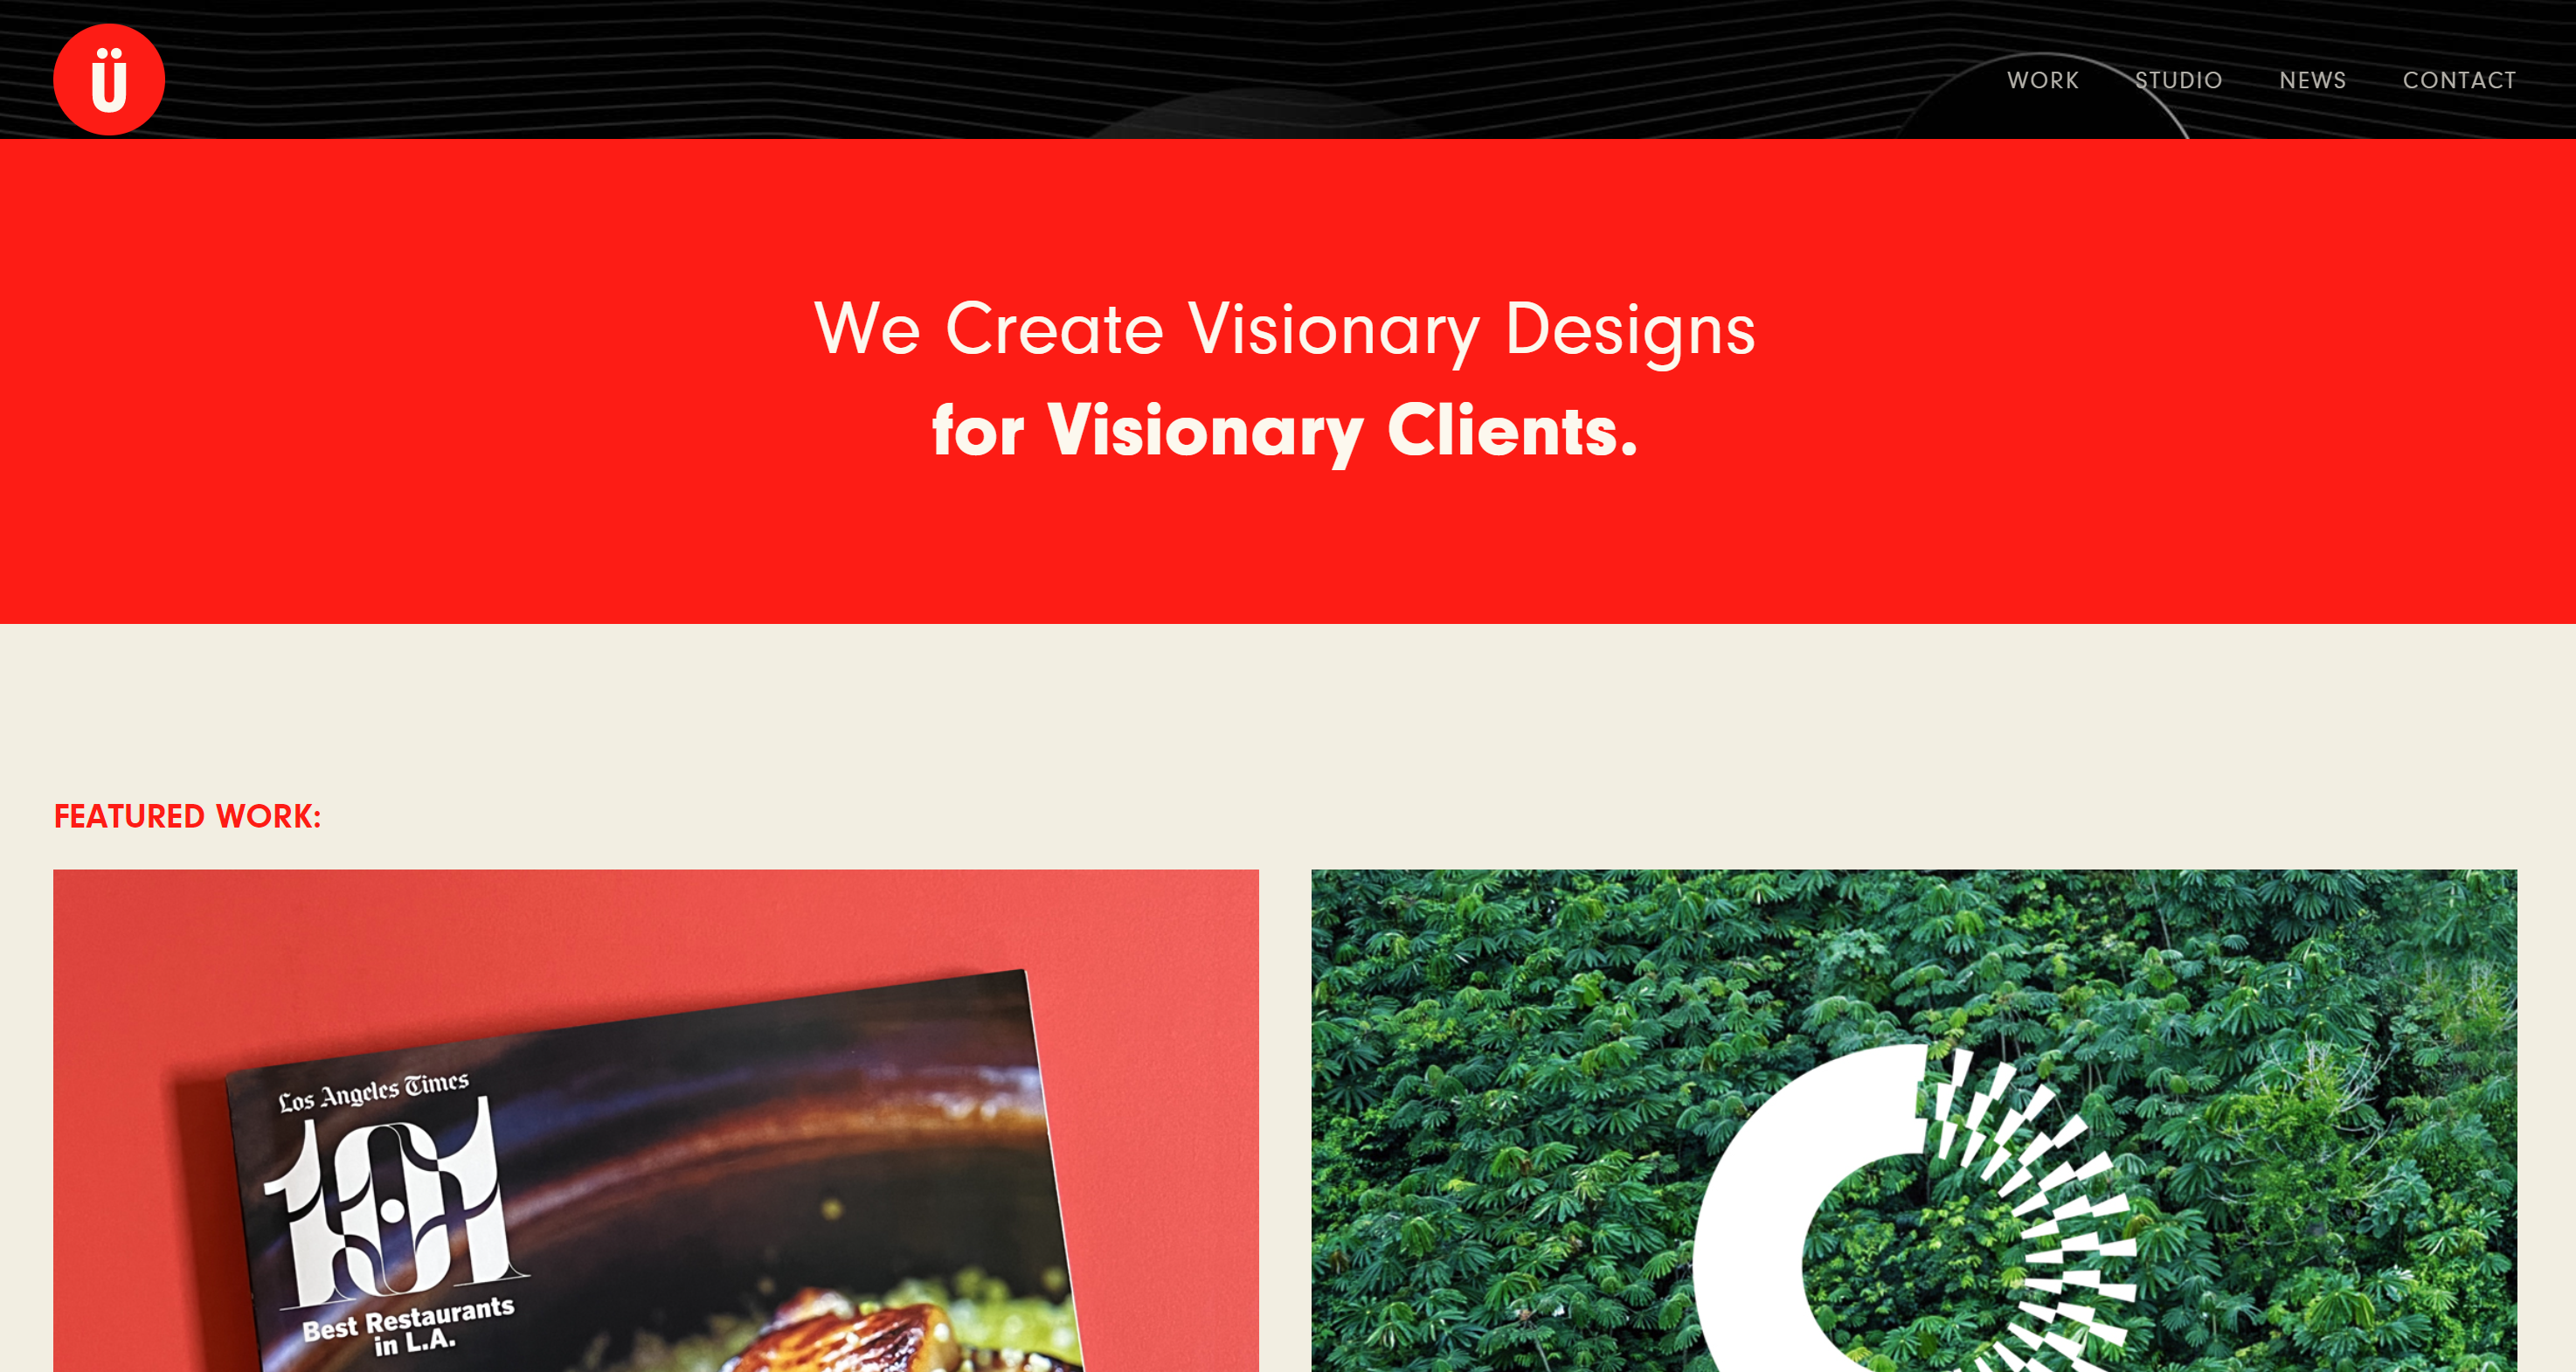 Red color in web design